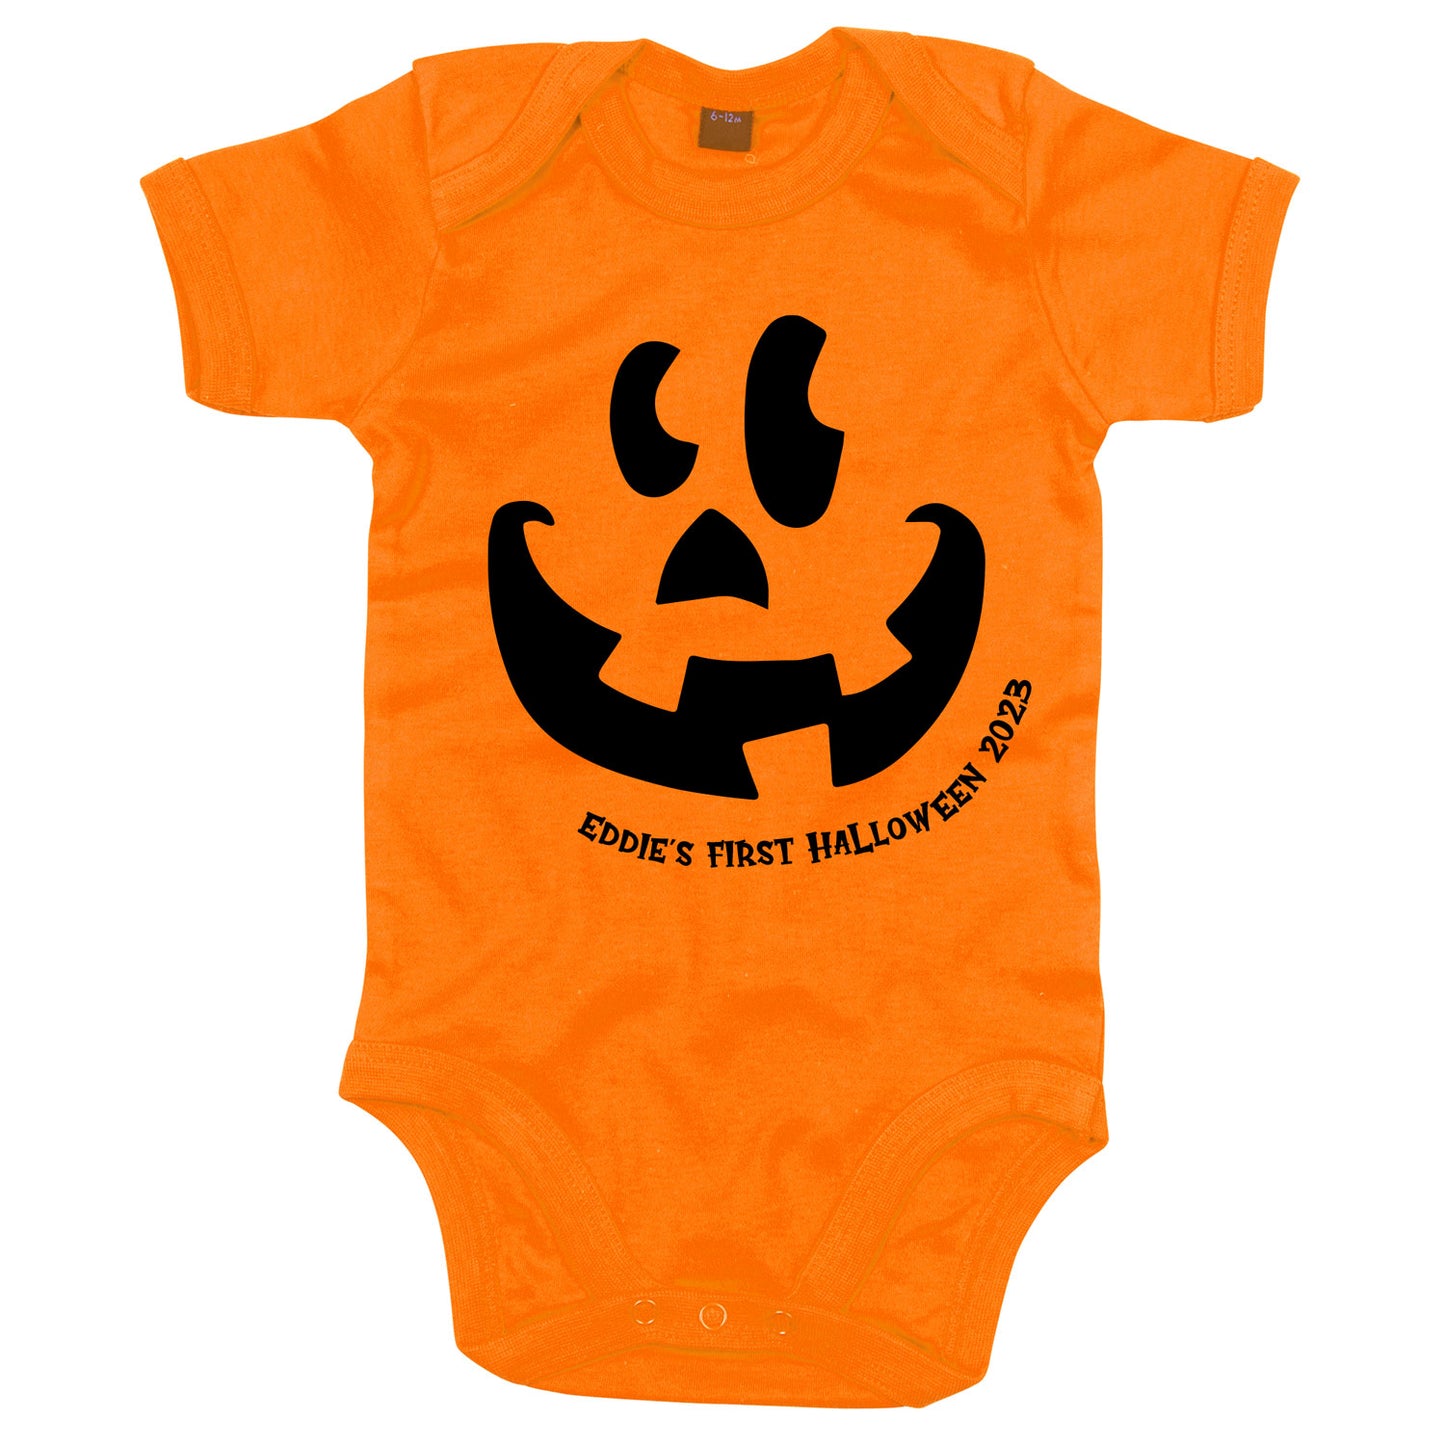 Babies First Halloween Vest (Personalised)